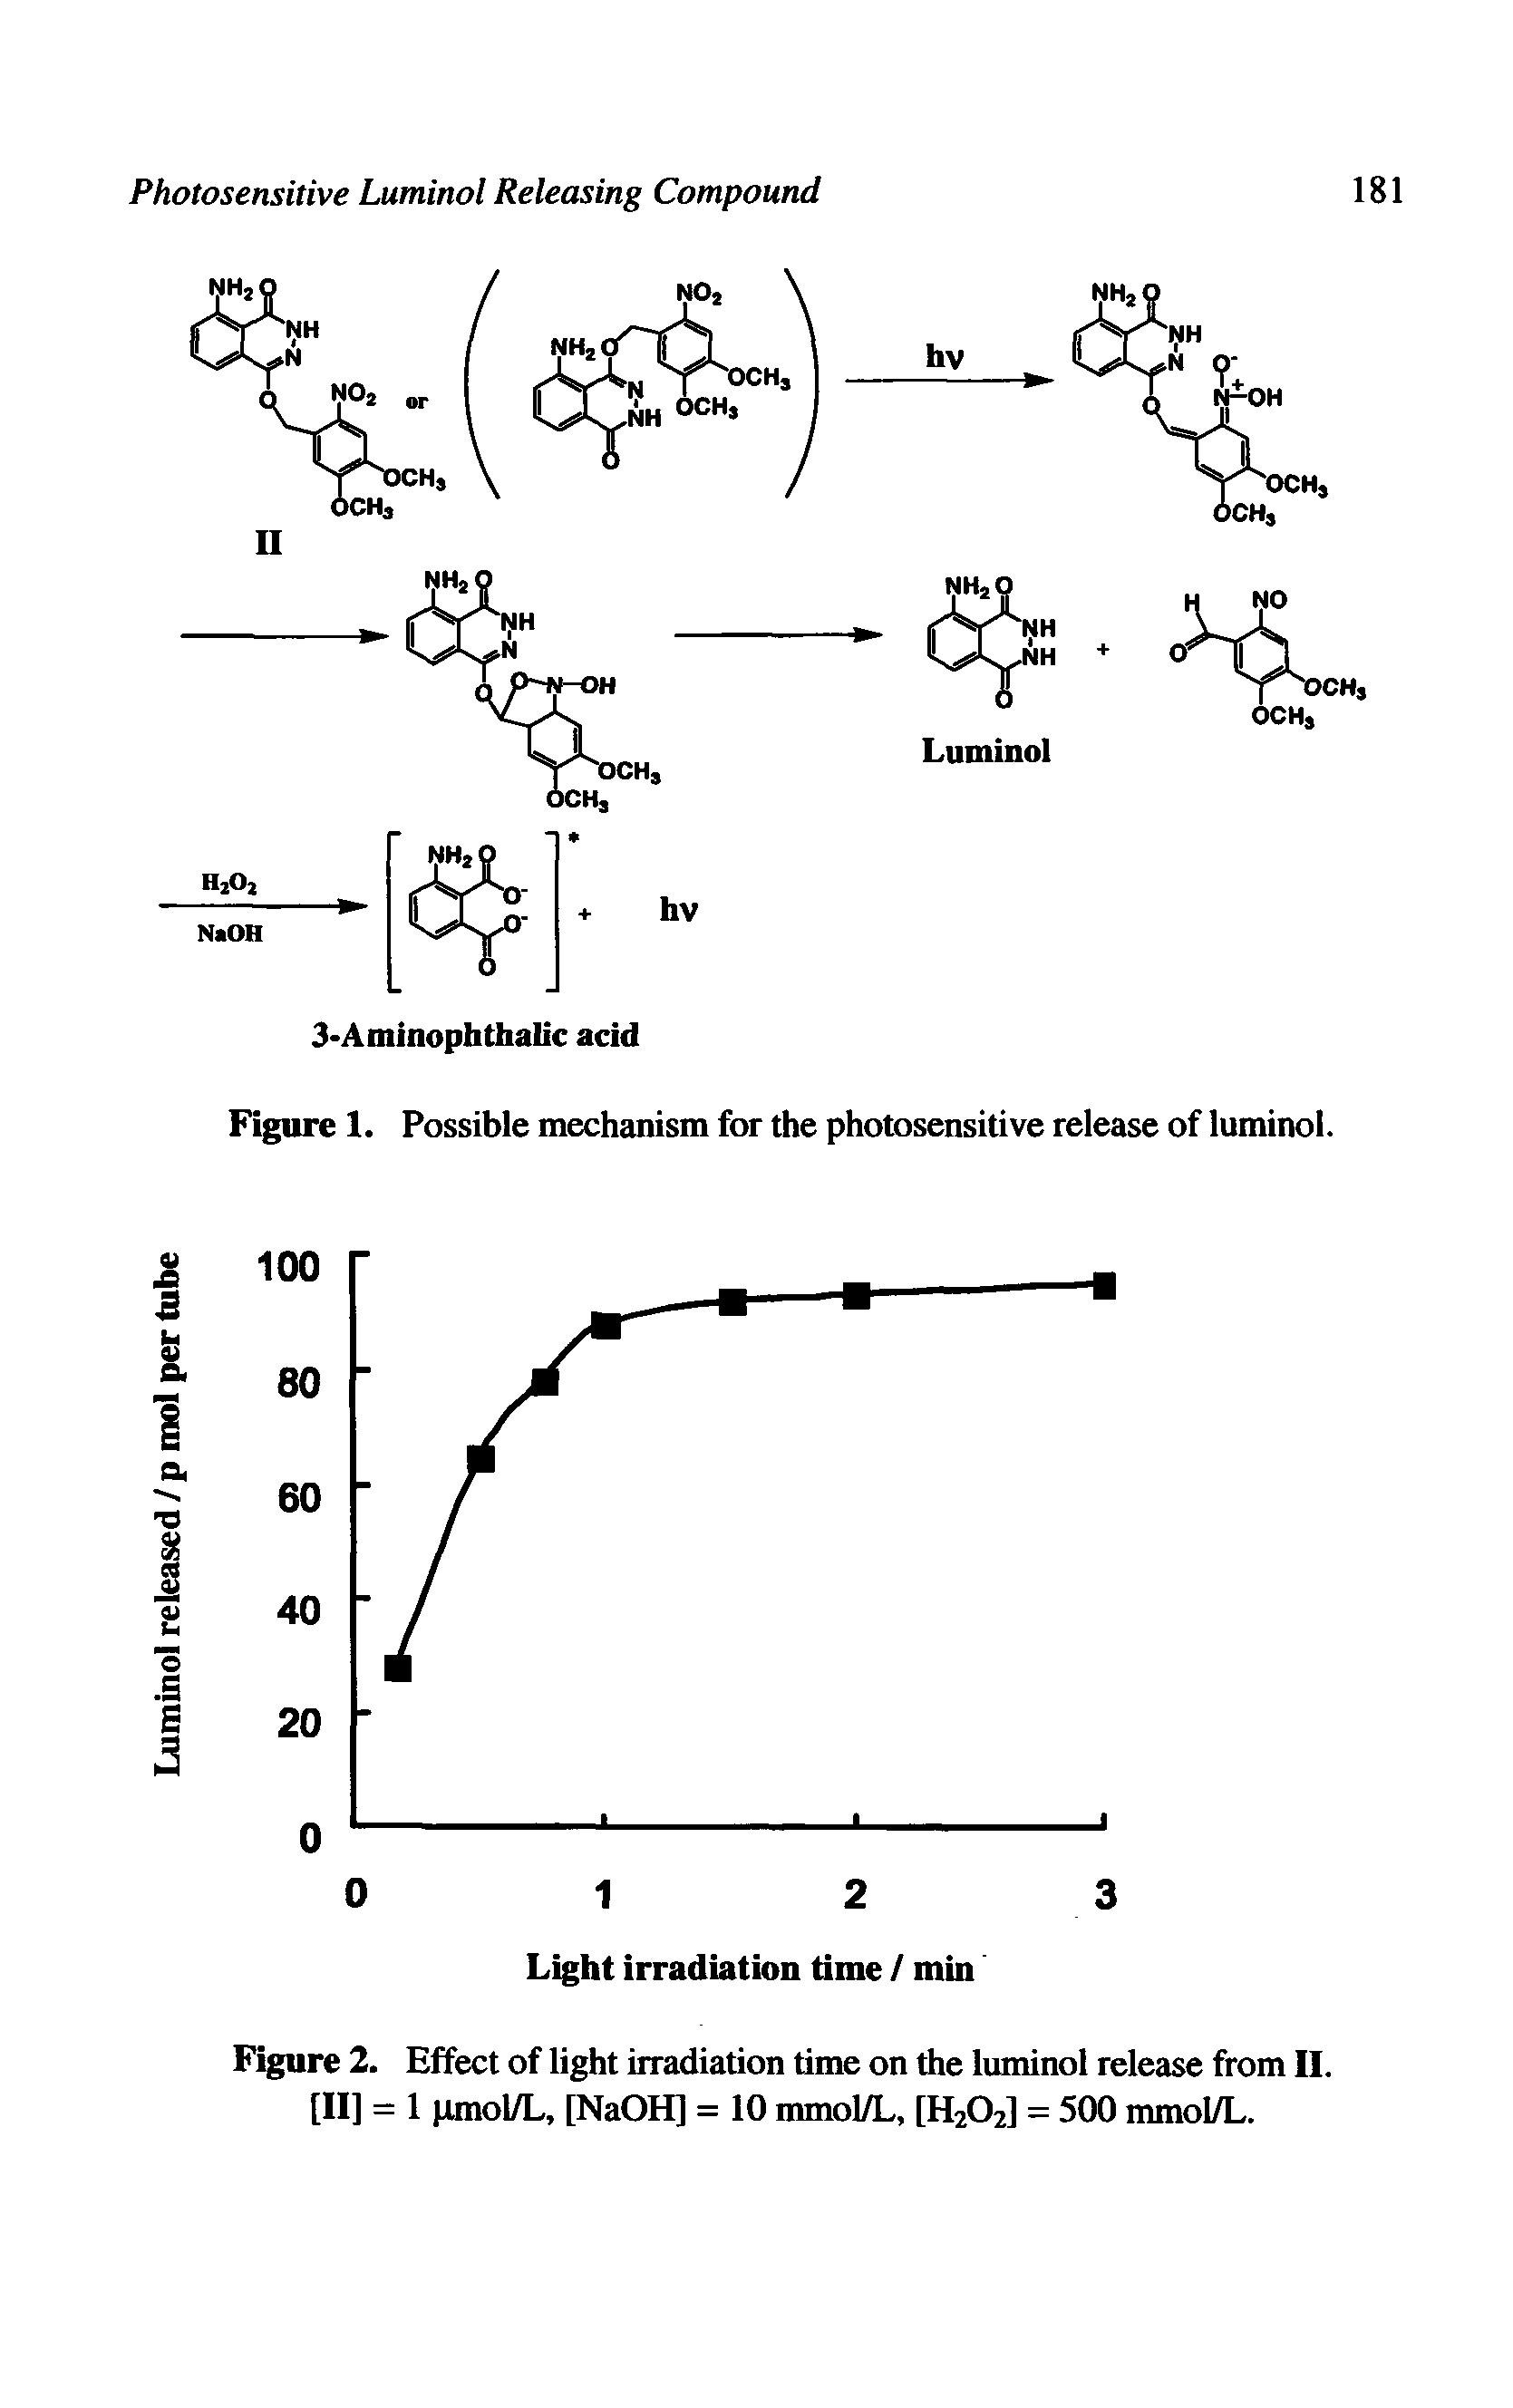 Figure 2. Effect of light irradiation time on the luminol release from II. [II] = 1 pmol/L, [NaOH] = 10 mmol/L, [H2O2] = 500 mmol/L.